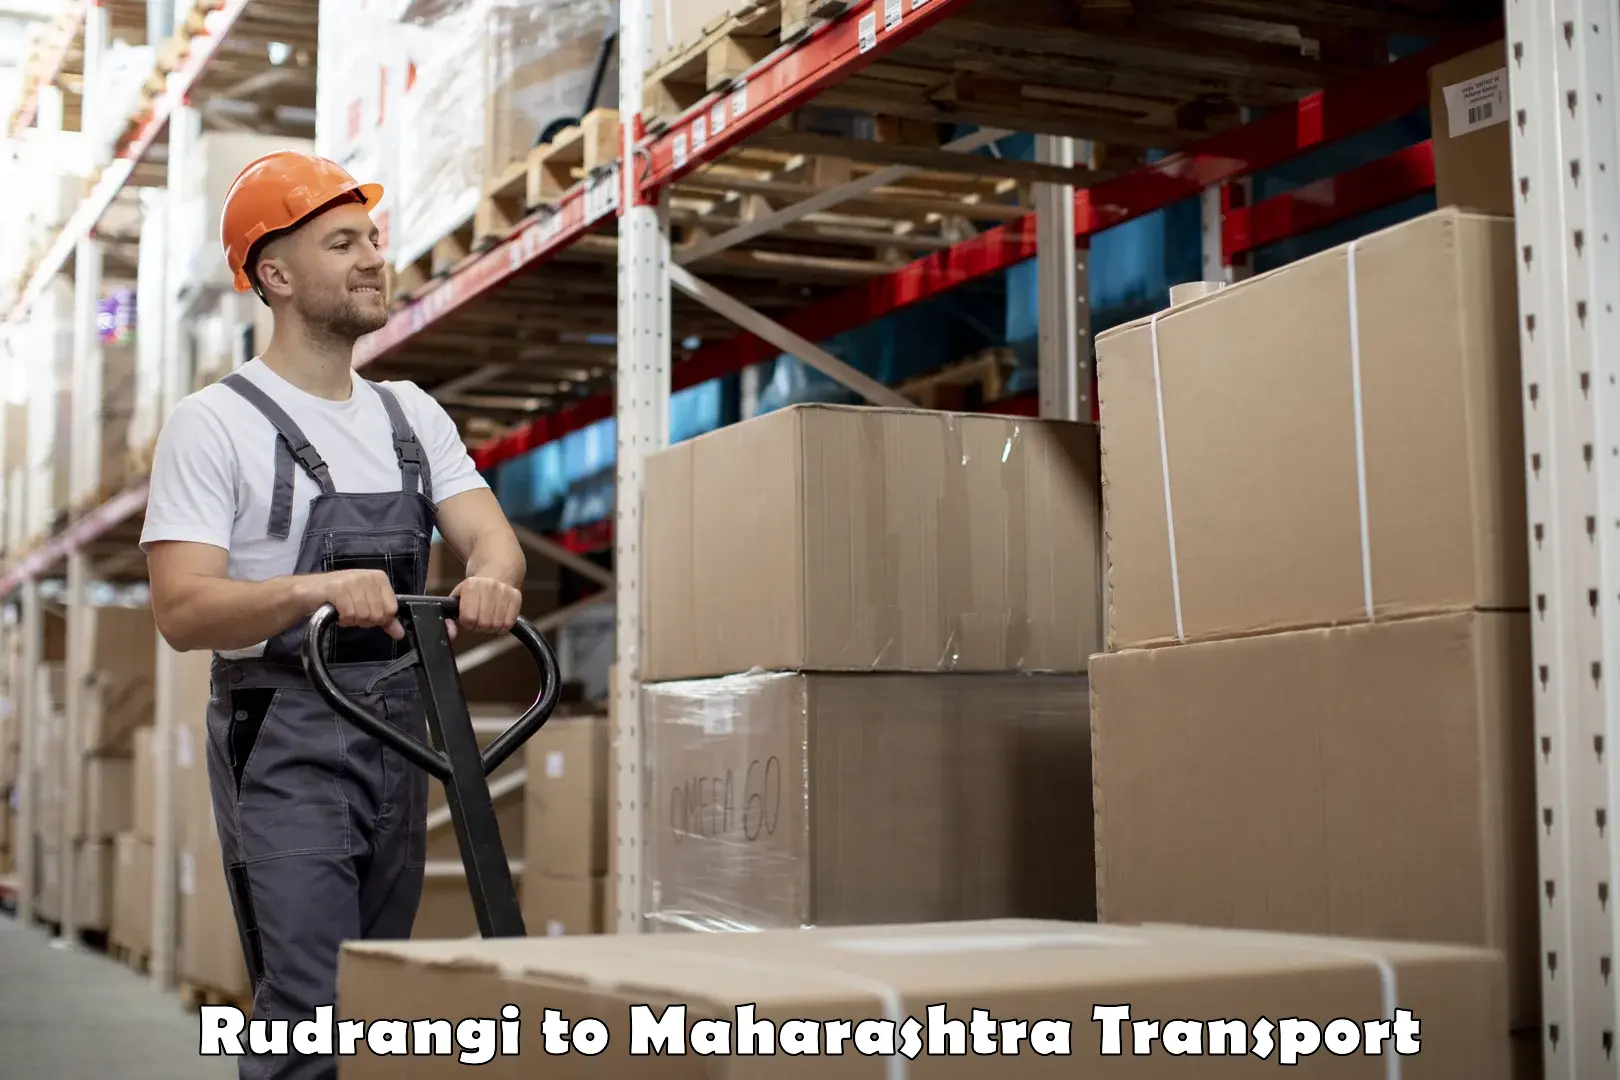 Truck transport companies in India Rudrangi to Walchandnagar